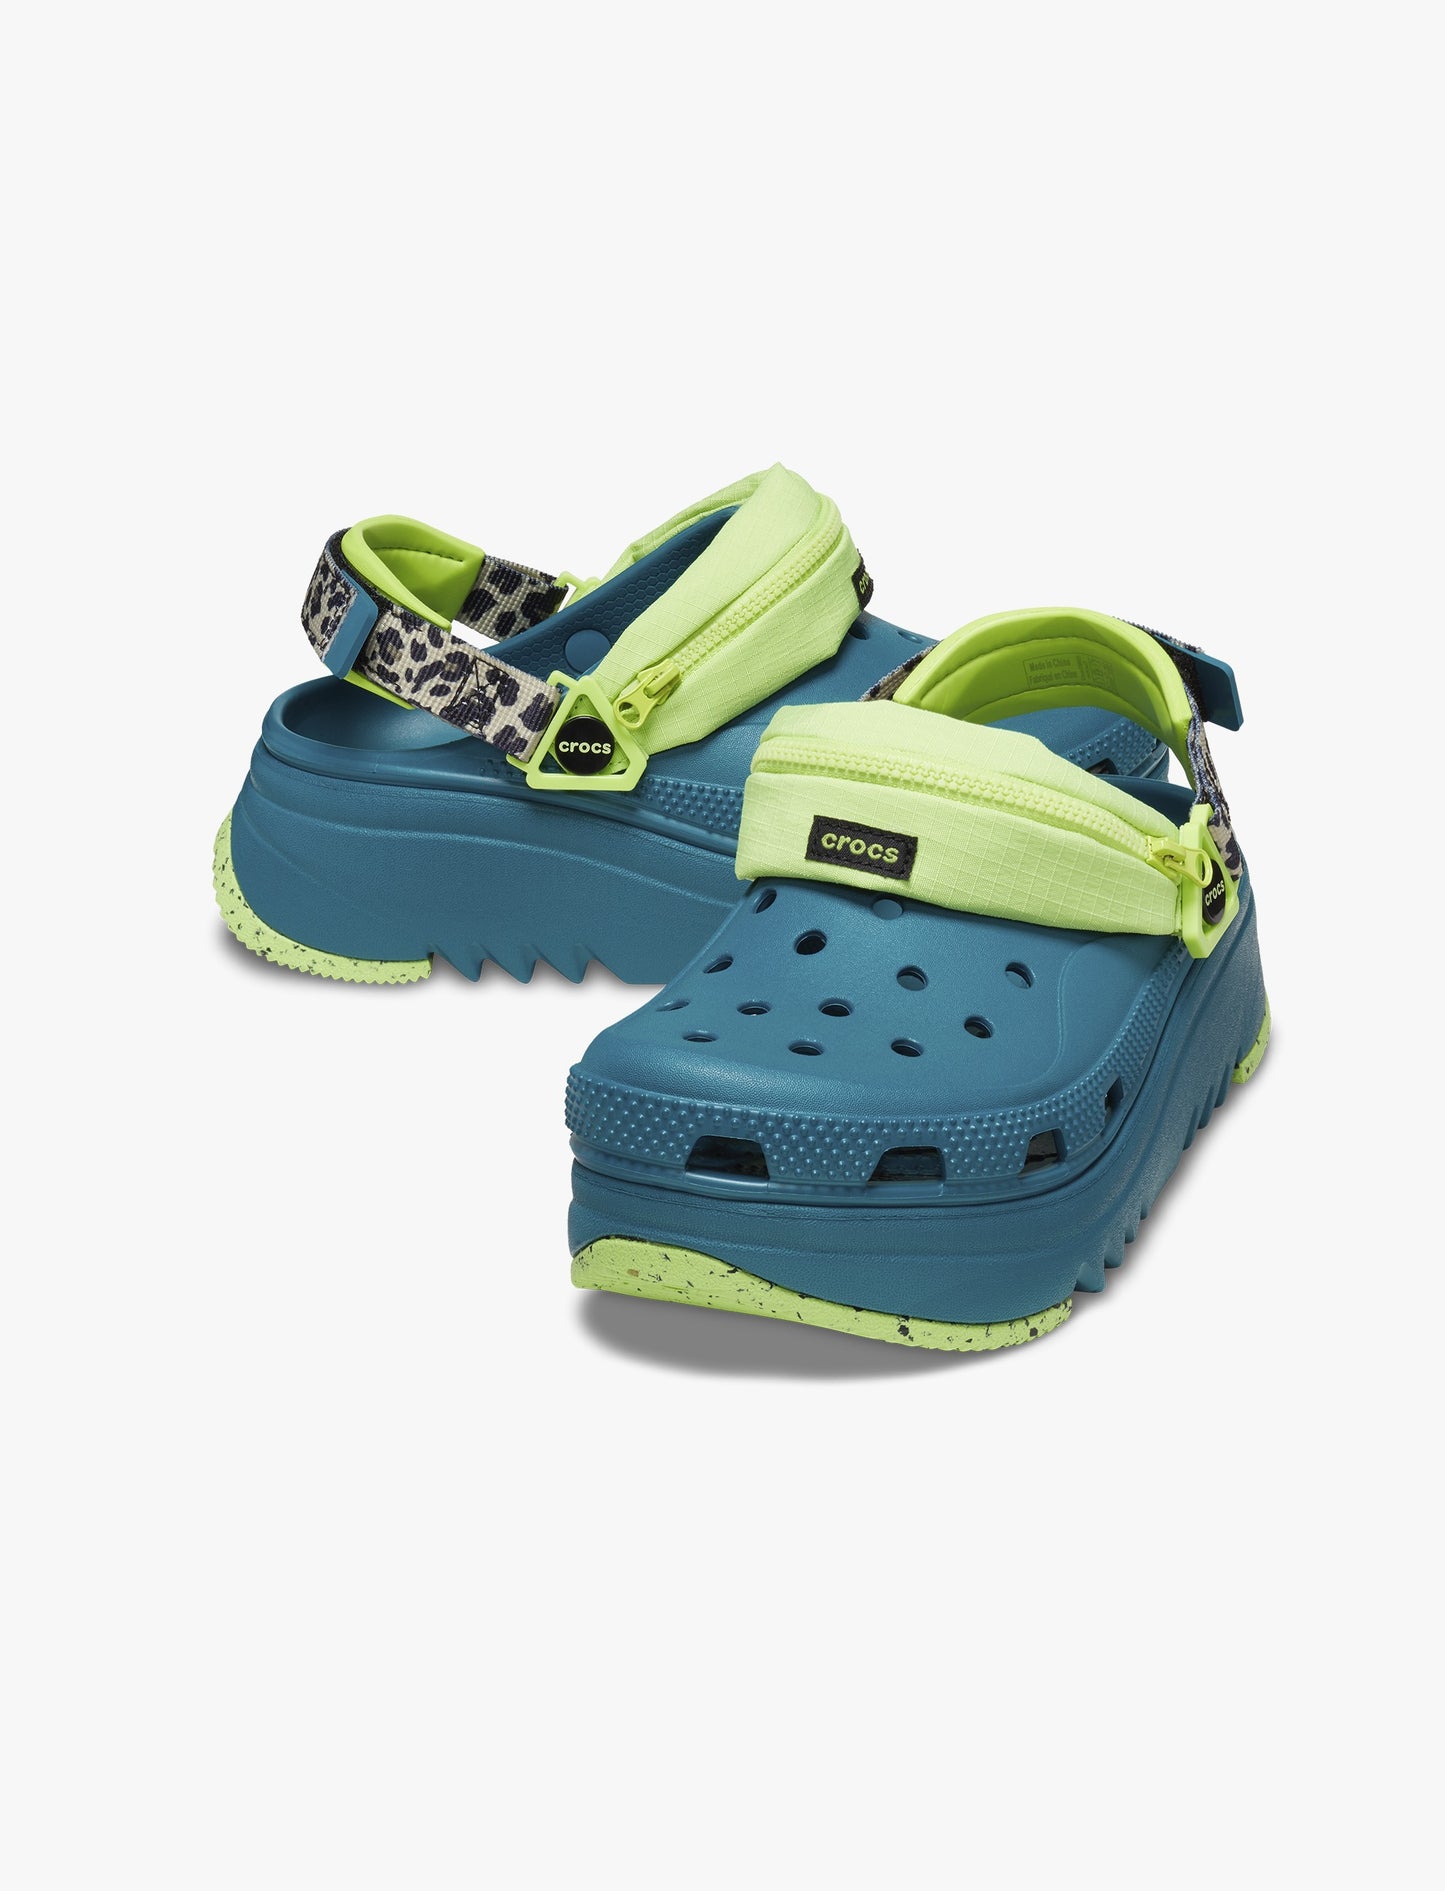 Crocs Hiker Xscape Animal Print Clog - כפכפי פלטפורמה גבוהות קרוקס לנשים